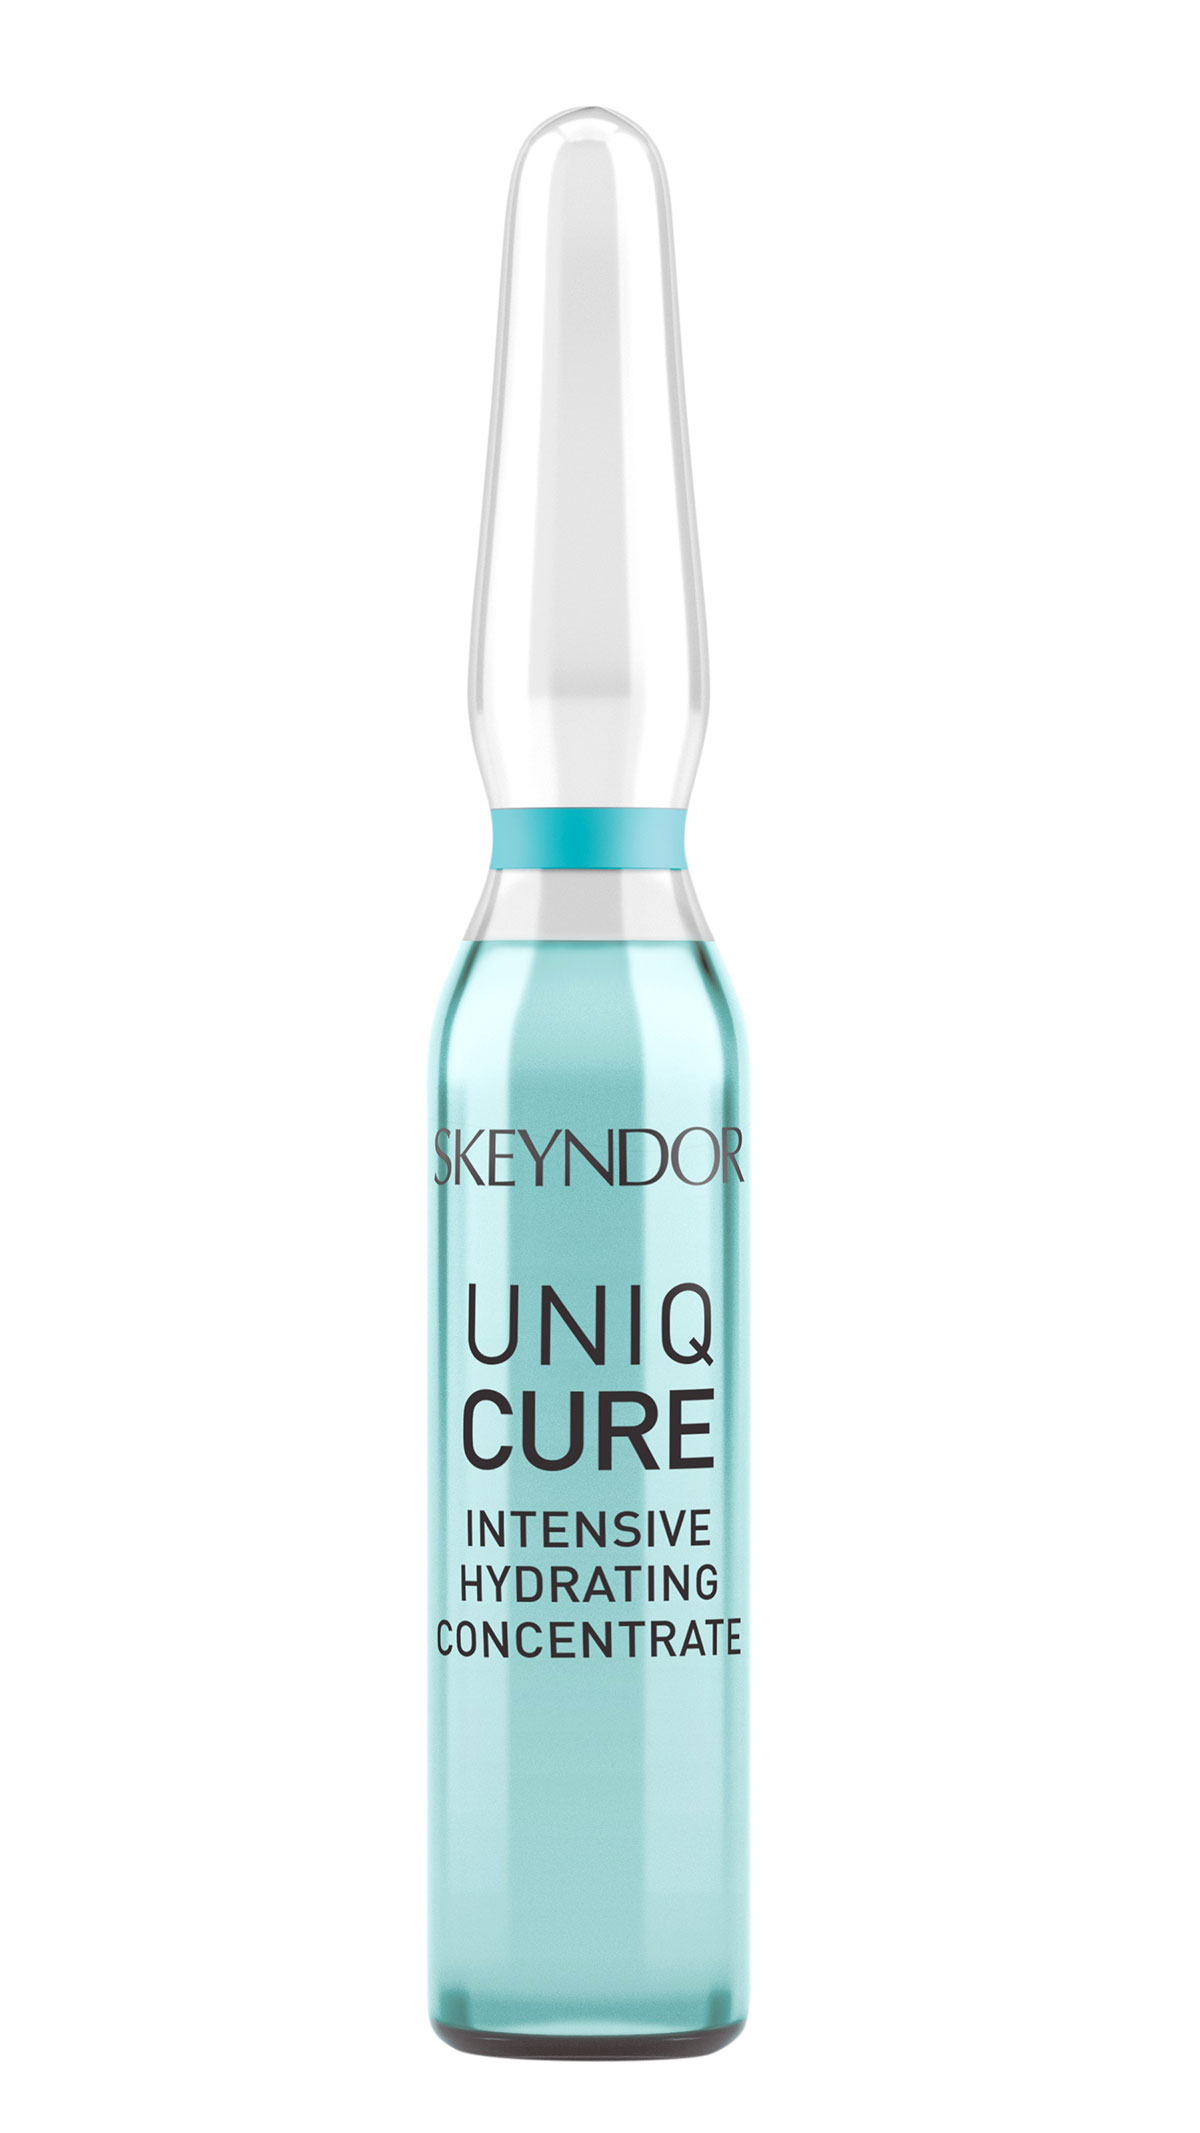 UNIQCURE_Intensive-Hydrating-Concentrate-de-Skeyndor-(PVP-26,15€-x-7amp)